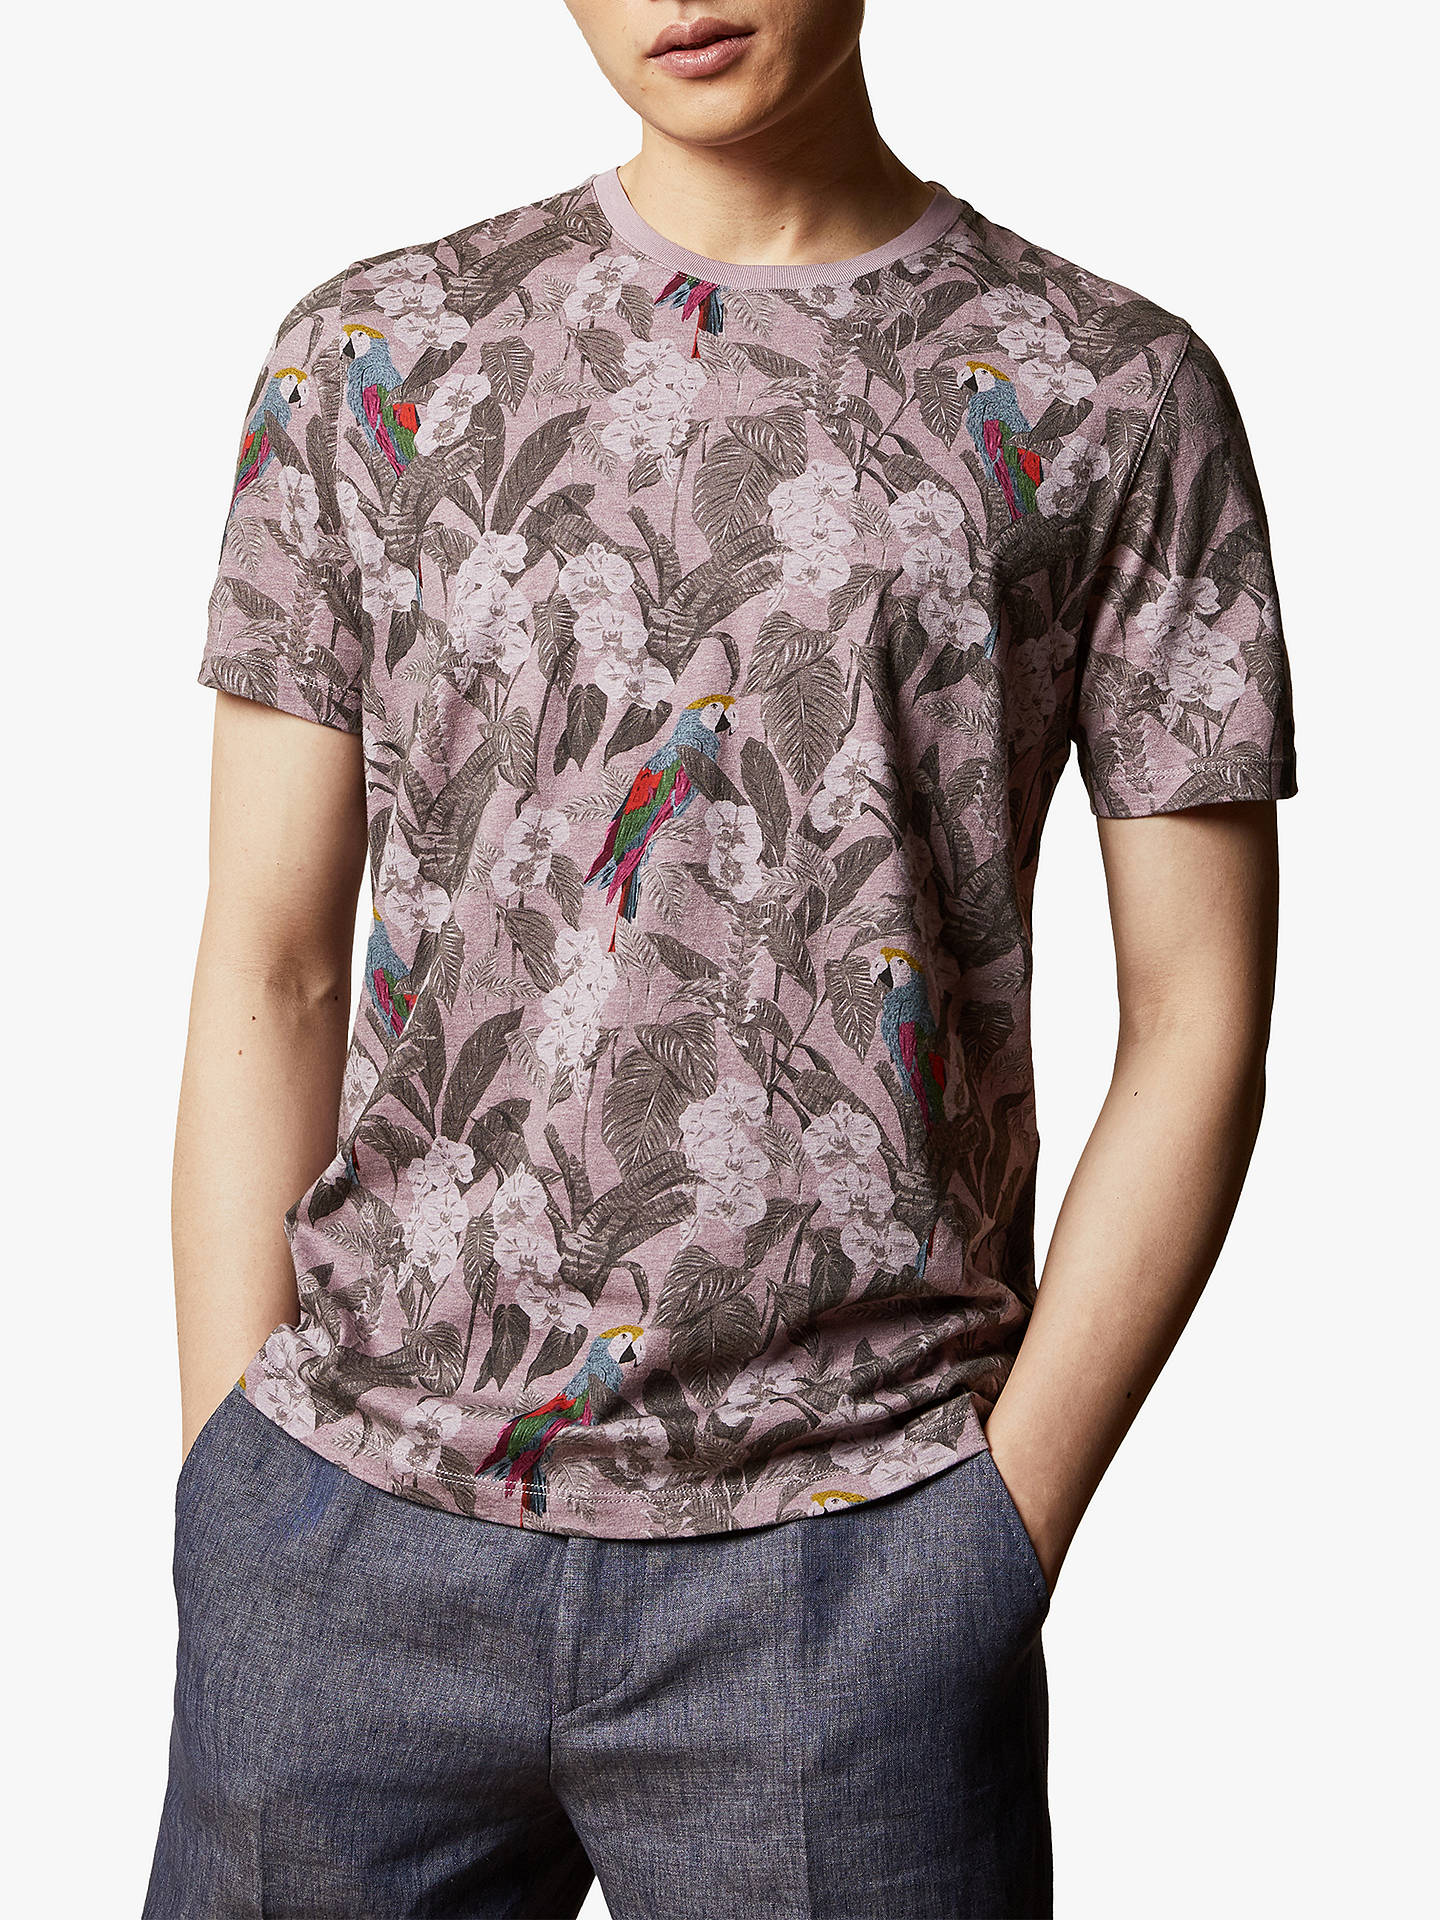 Ted Baker Freshte Floral Parrot Print T-Shirt at John Lewis & Partners